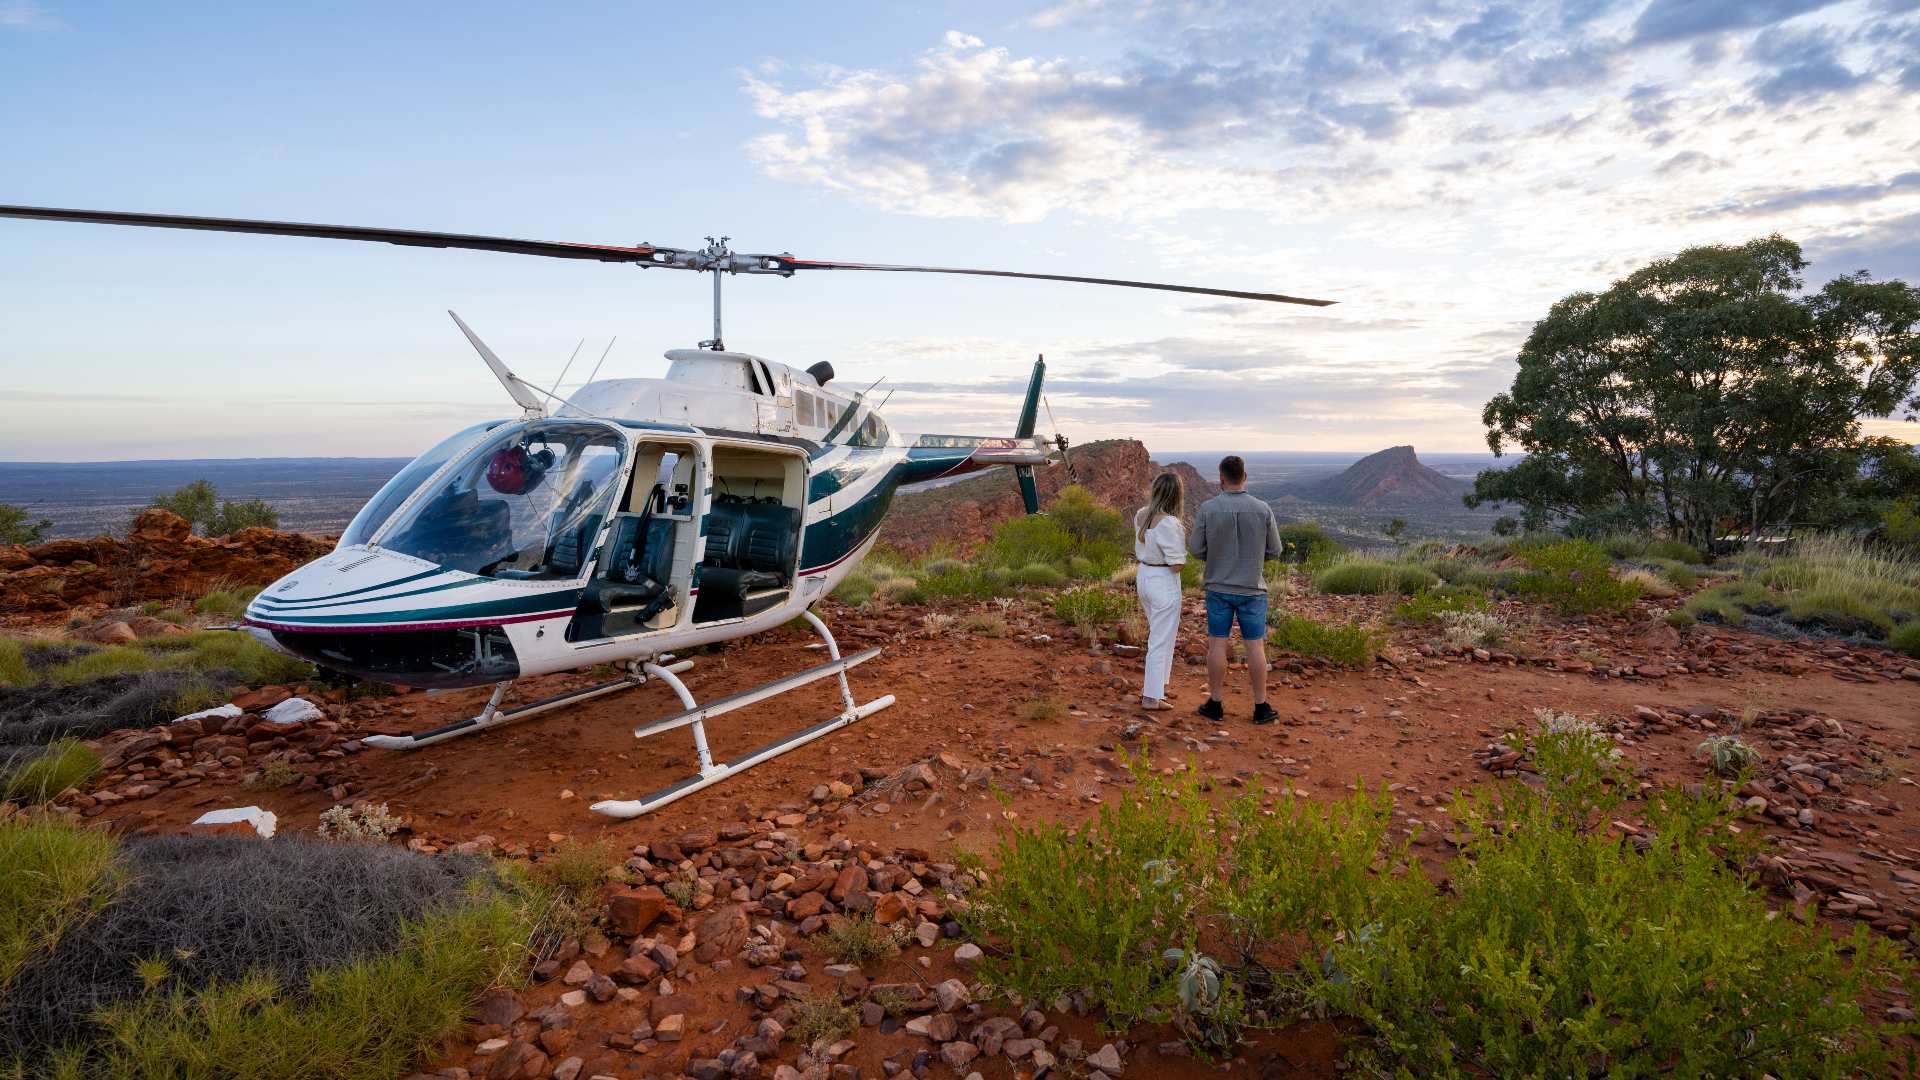 Range View Romantic Helicopter Tour